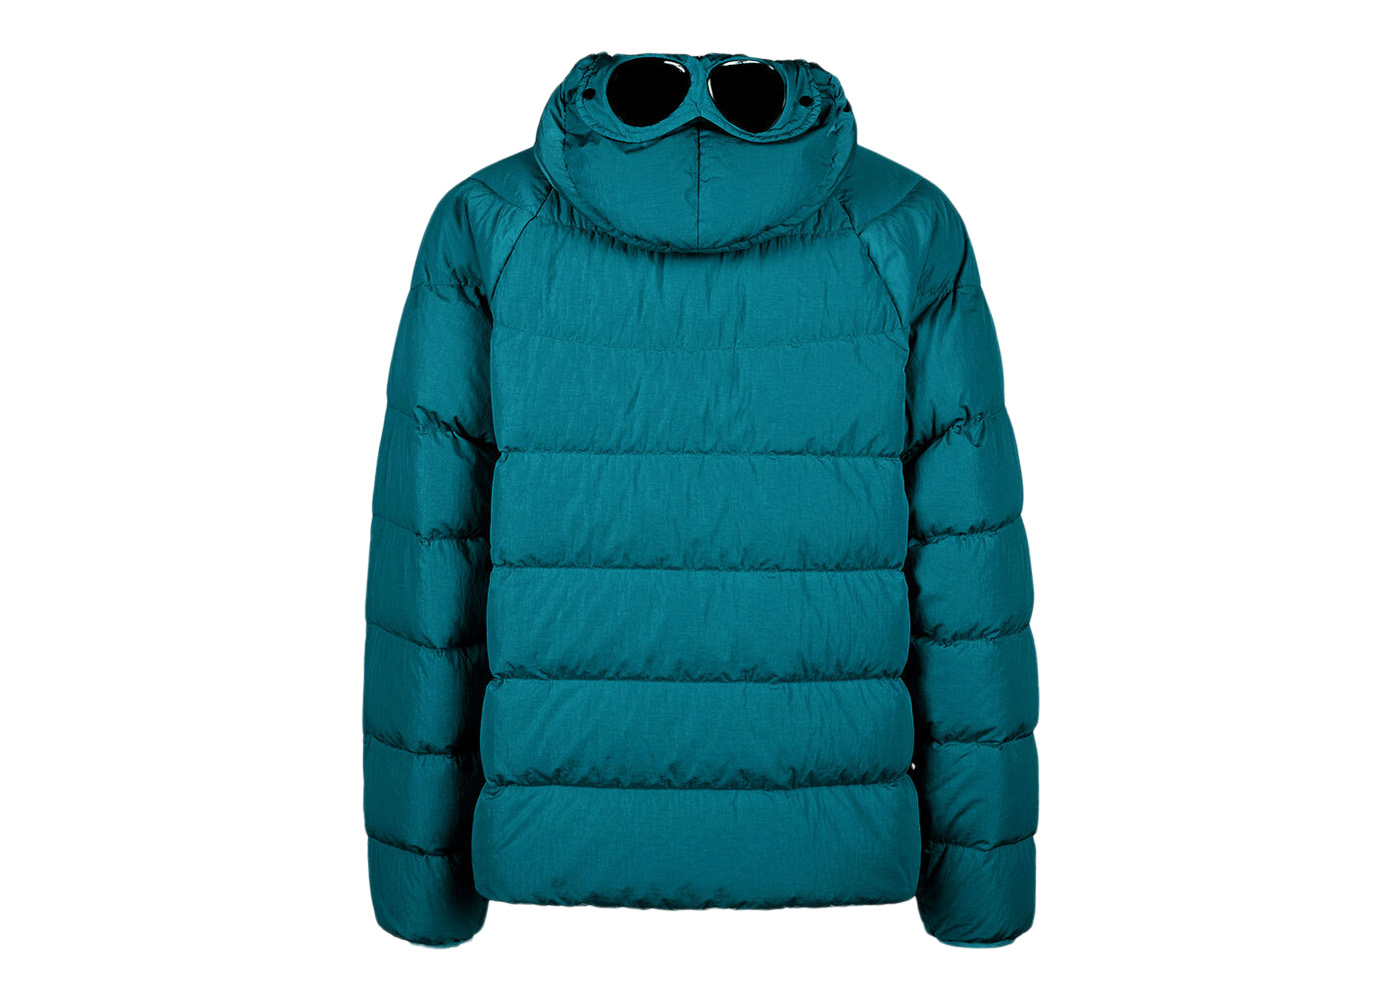 C.P. Company Eco-Chrome R hooded padded jacket - Blue